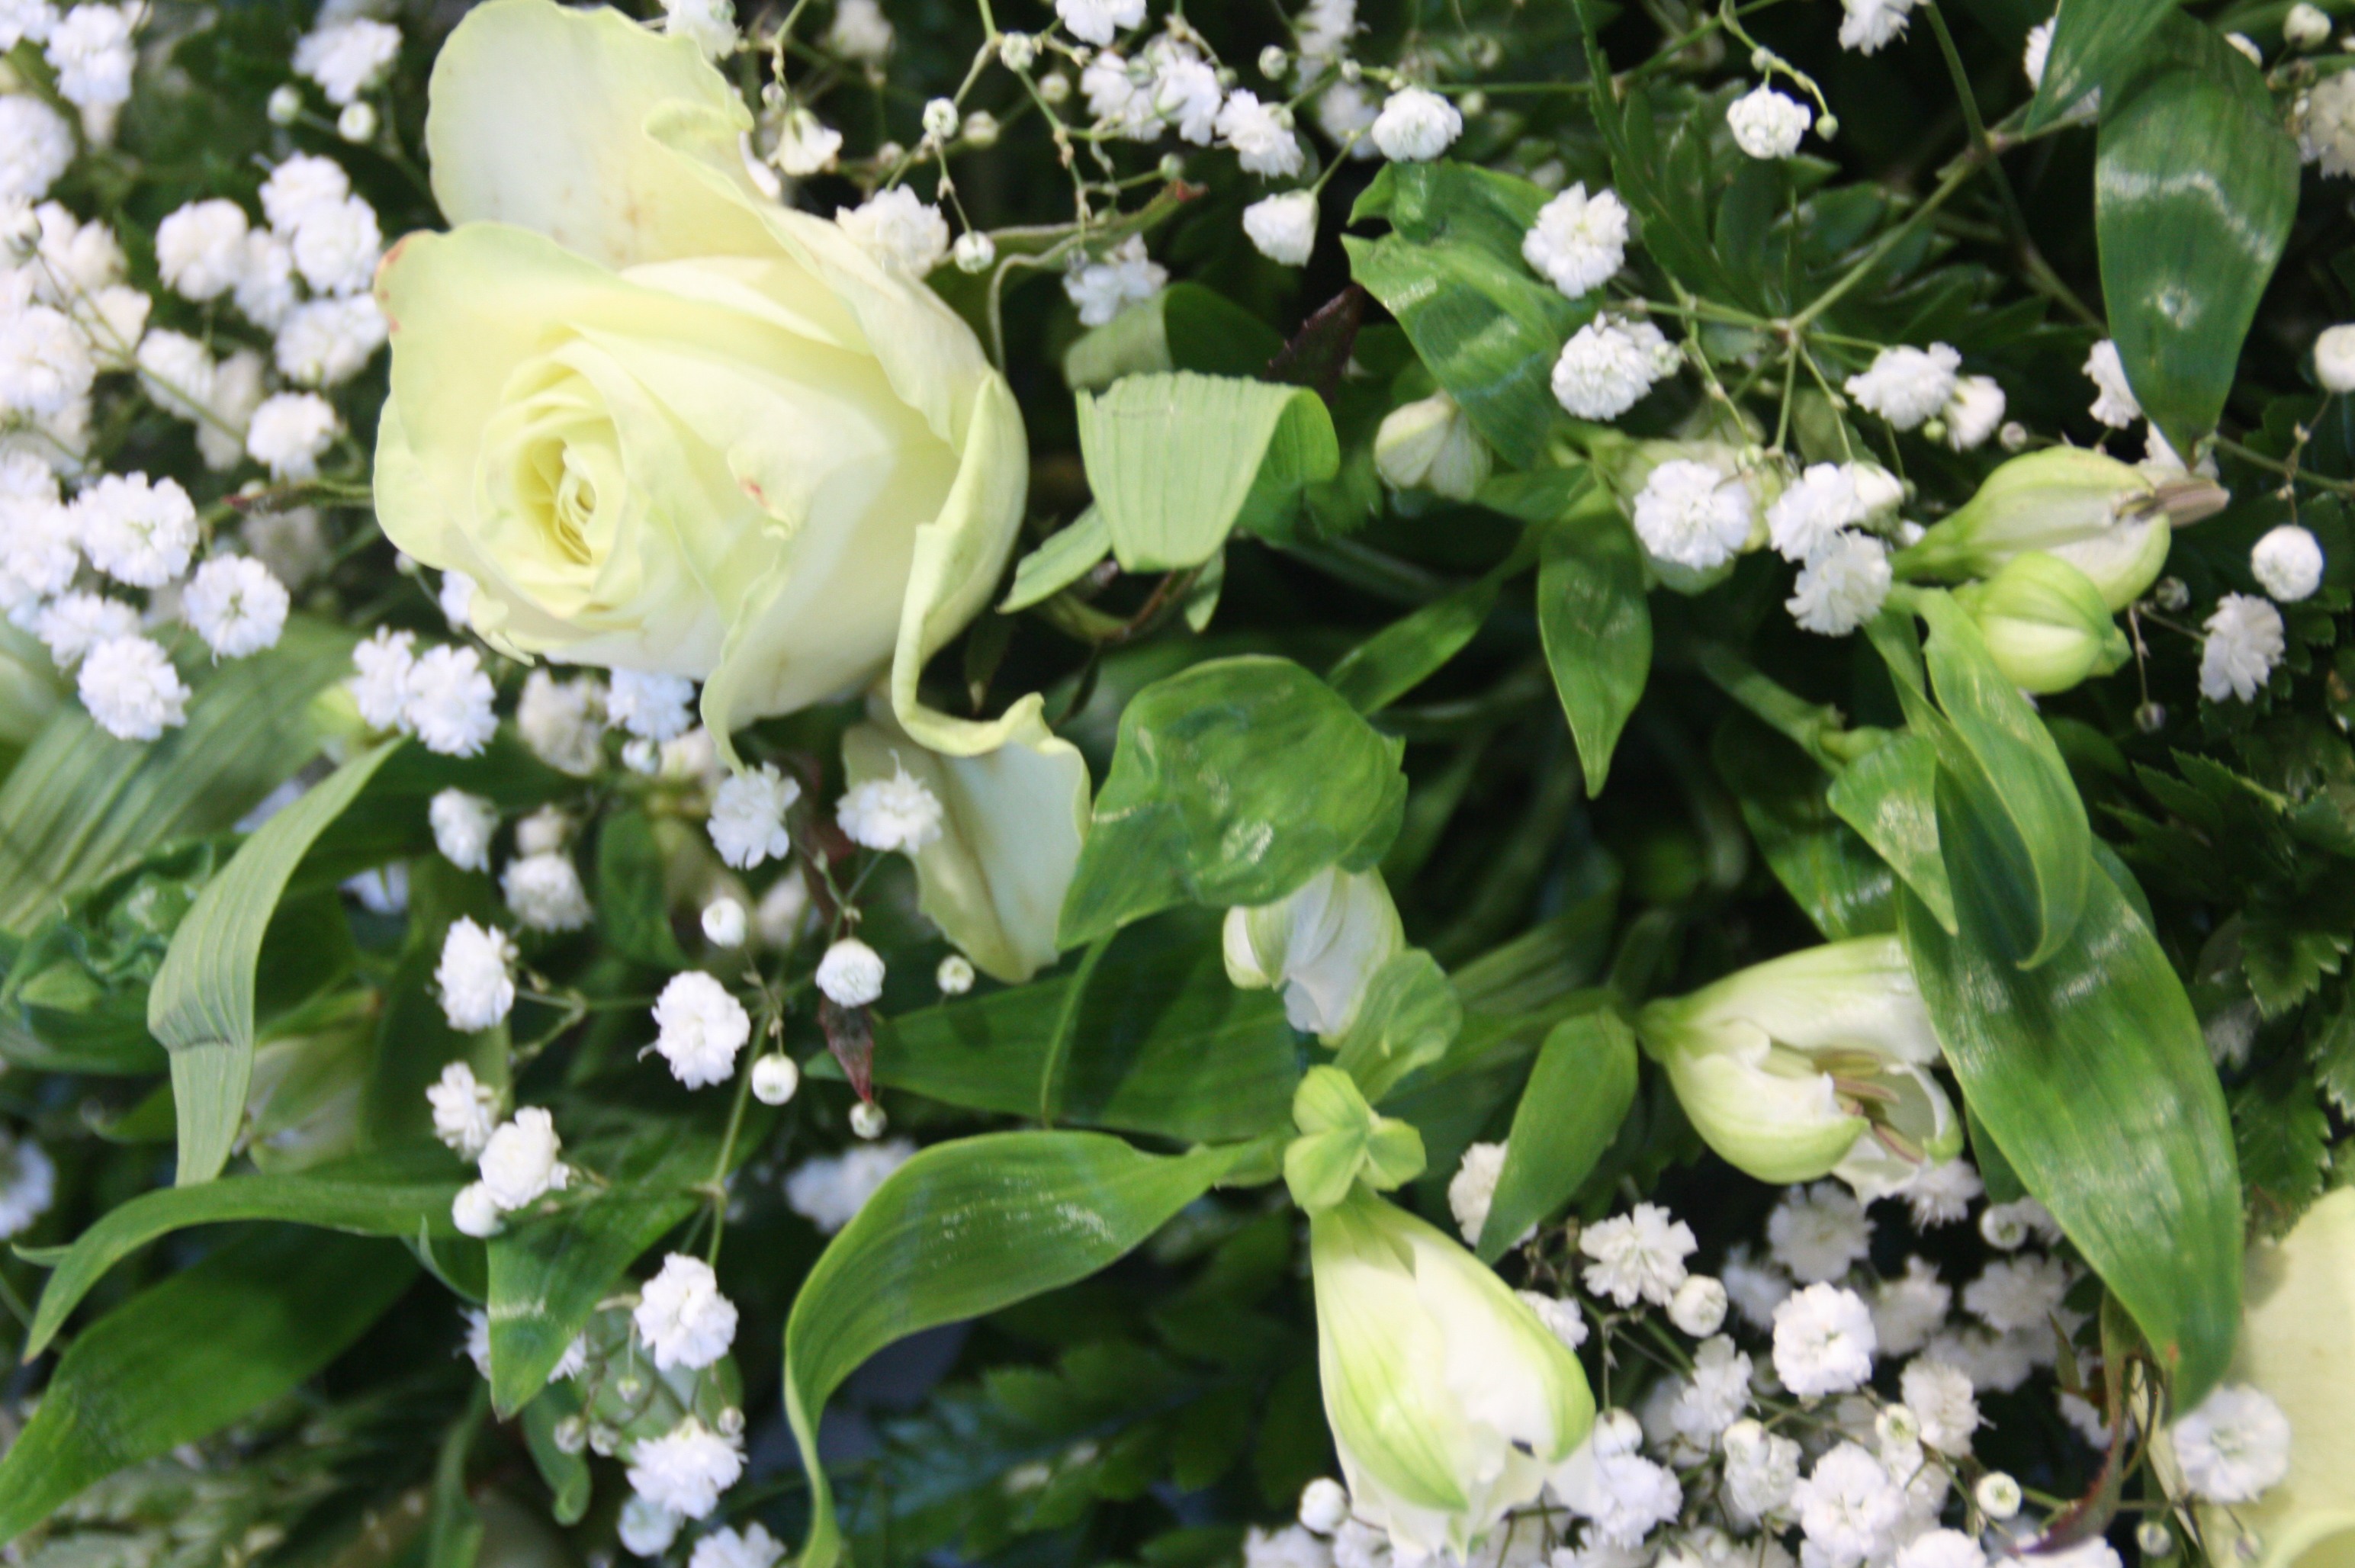 rouwstuk roos alstromeria wit